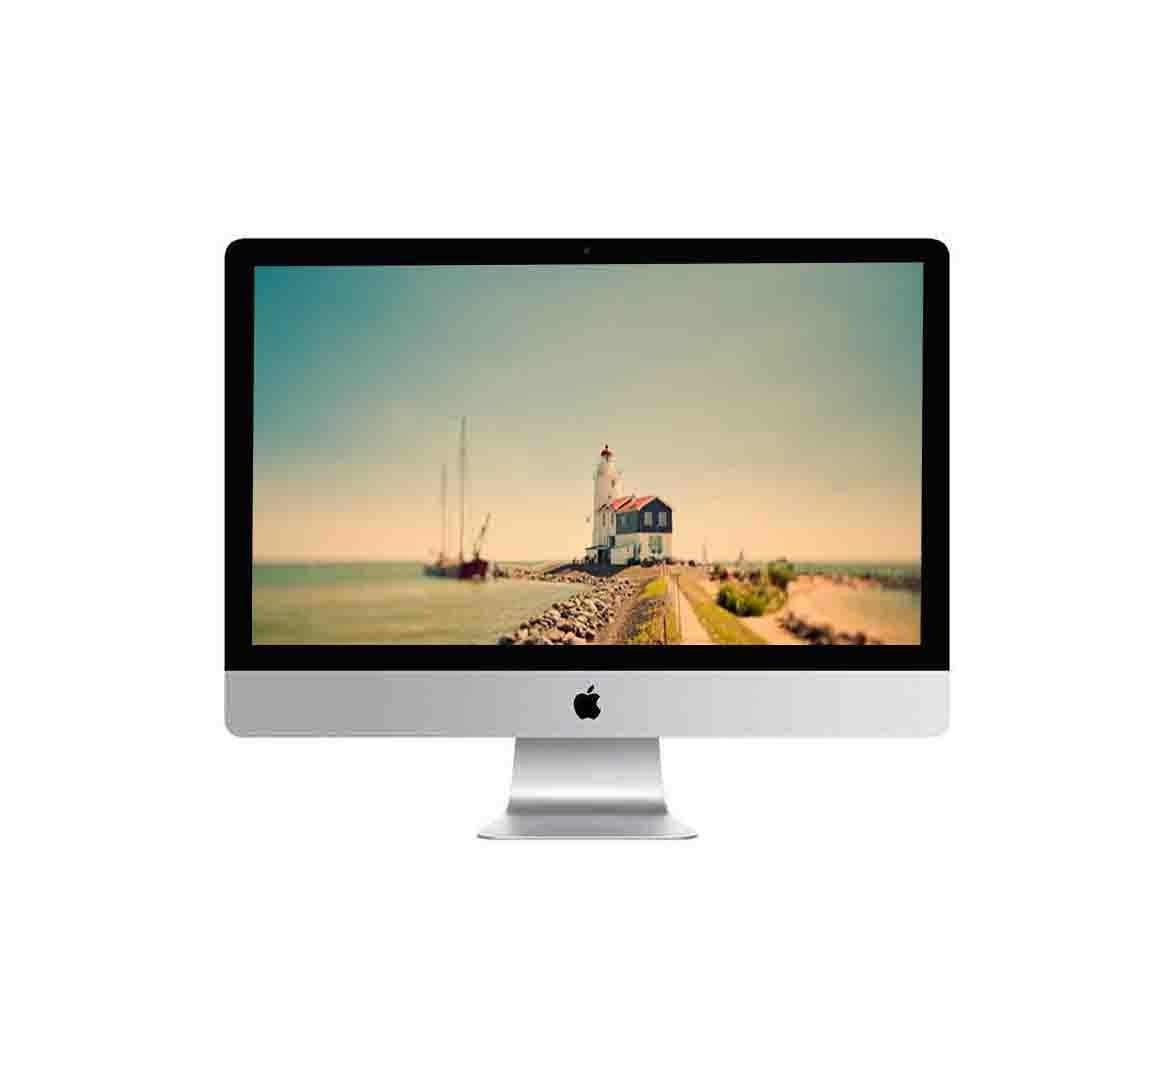 Apple iMac 27" 2013 I5 1TB 24GB 755M A1419 All-in-One Desktop PC Computer B